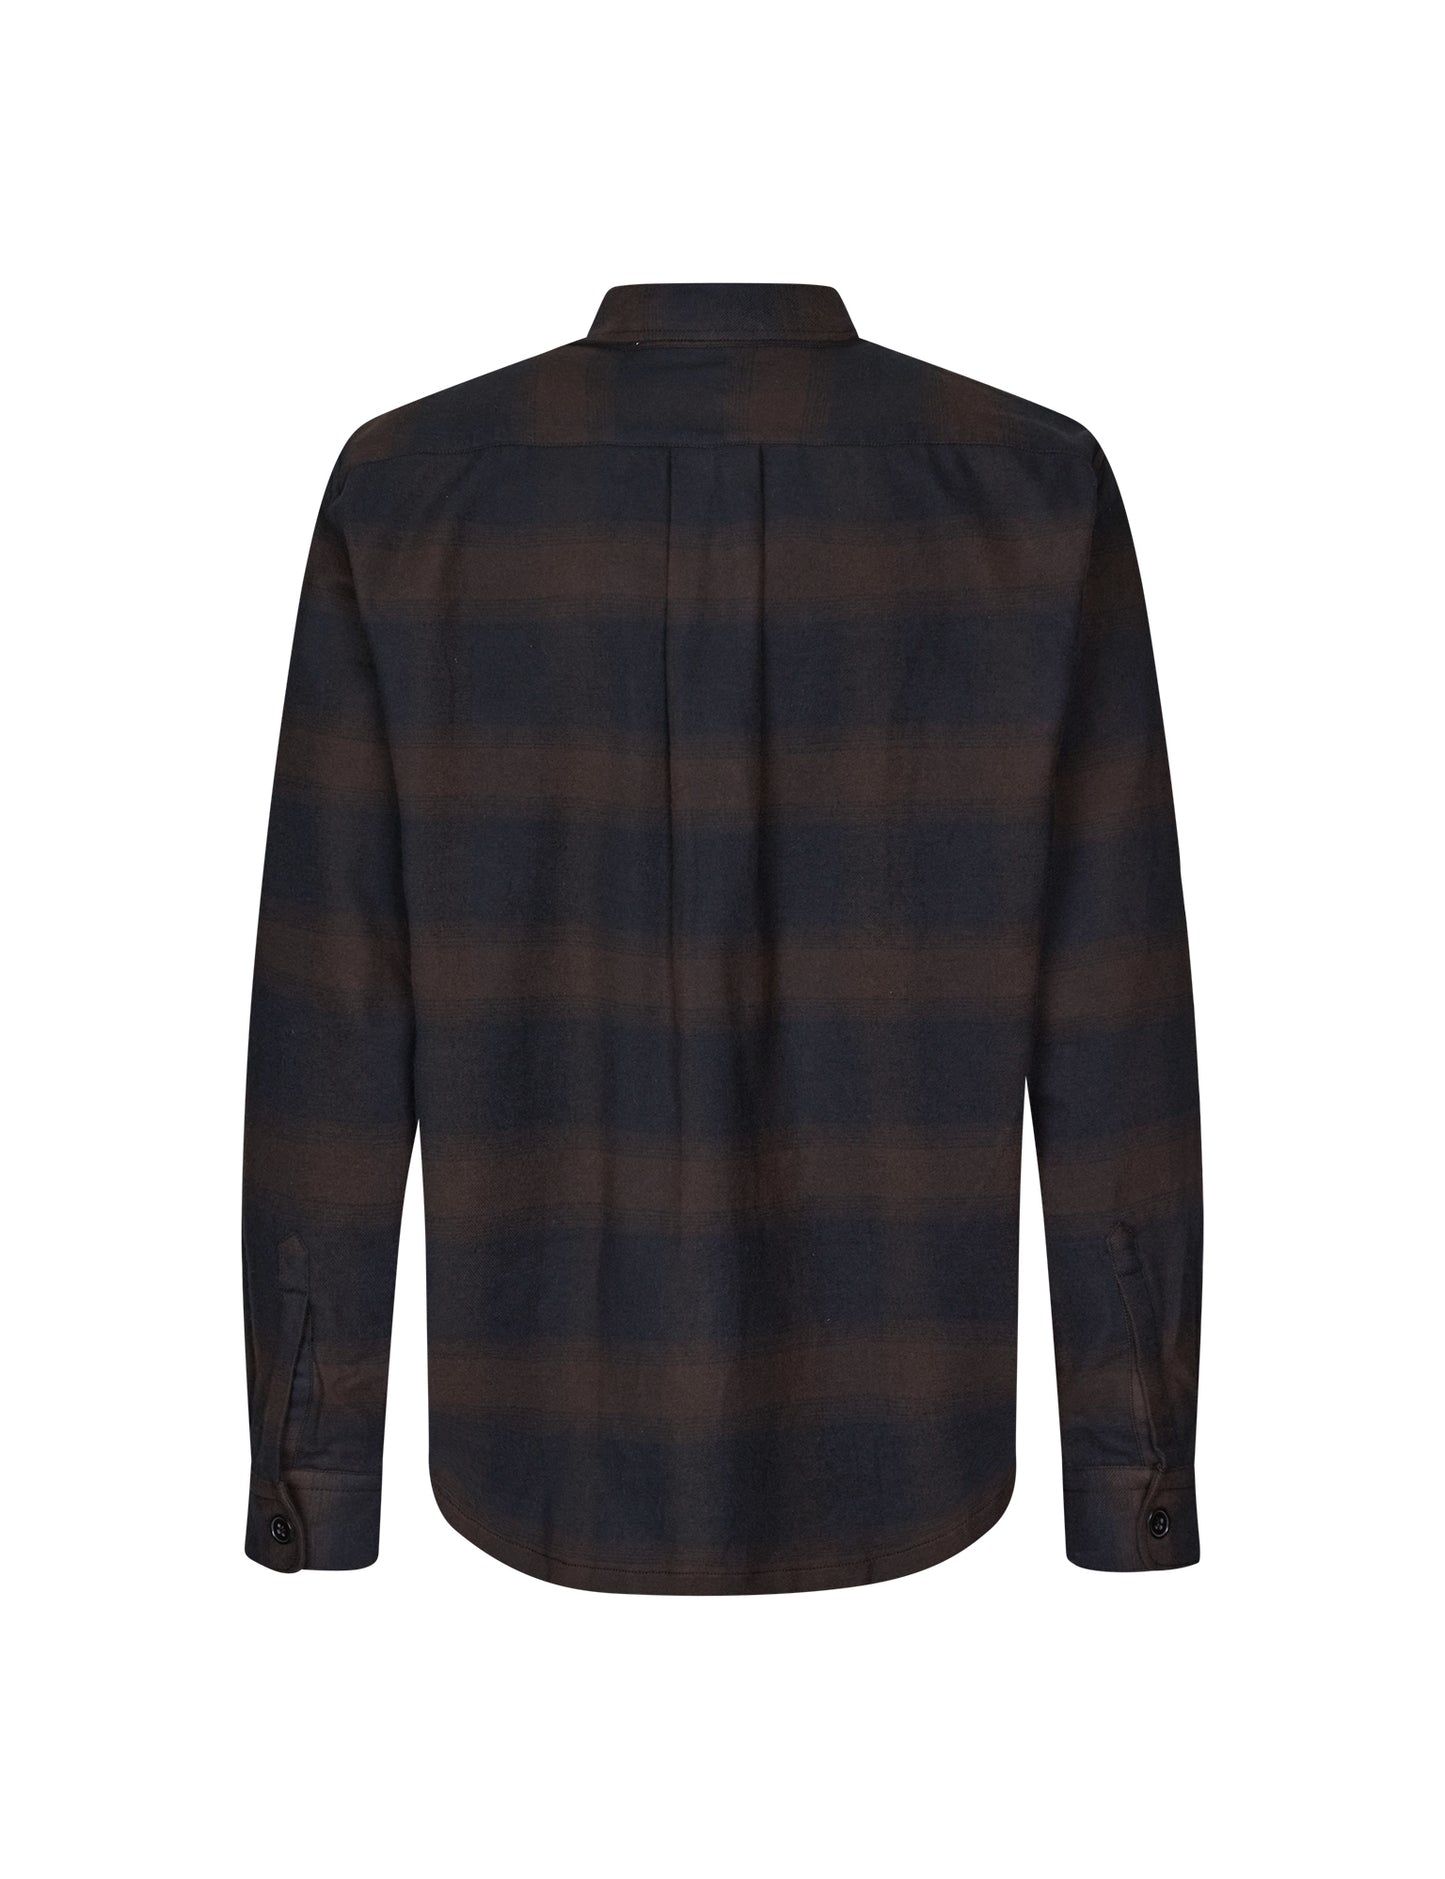 Flannel Heavy Malte  Check Shirt, Deep Well/After Dark Check